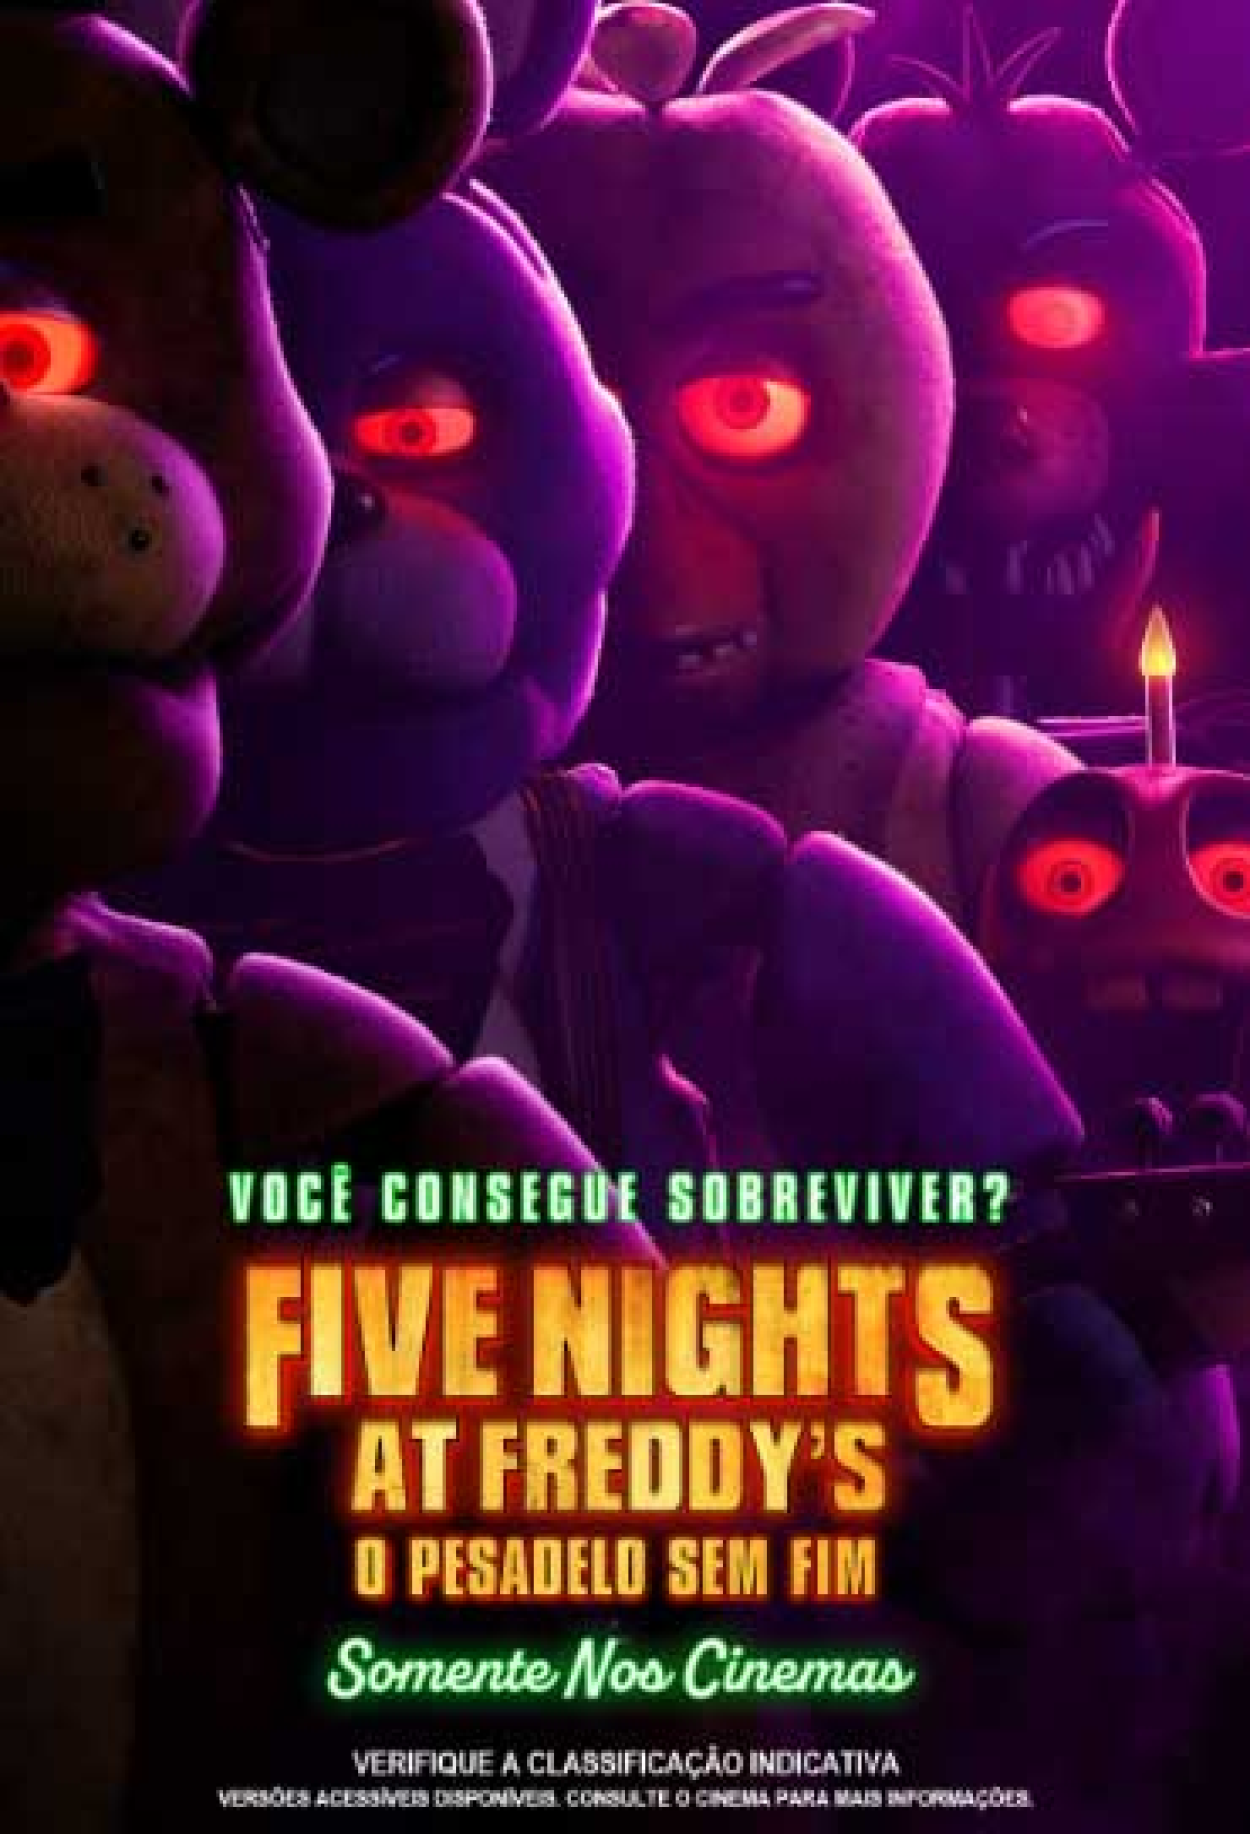 FIVE NIGHTS AT FREDDYS - O PESADELO SEM FIM